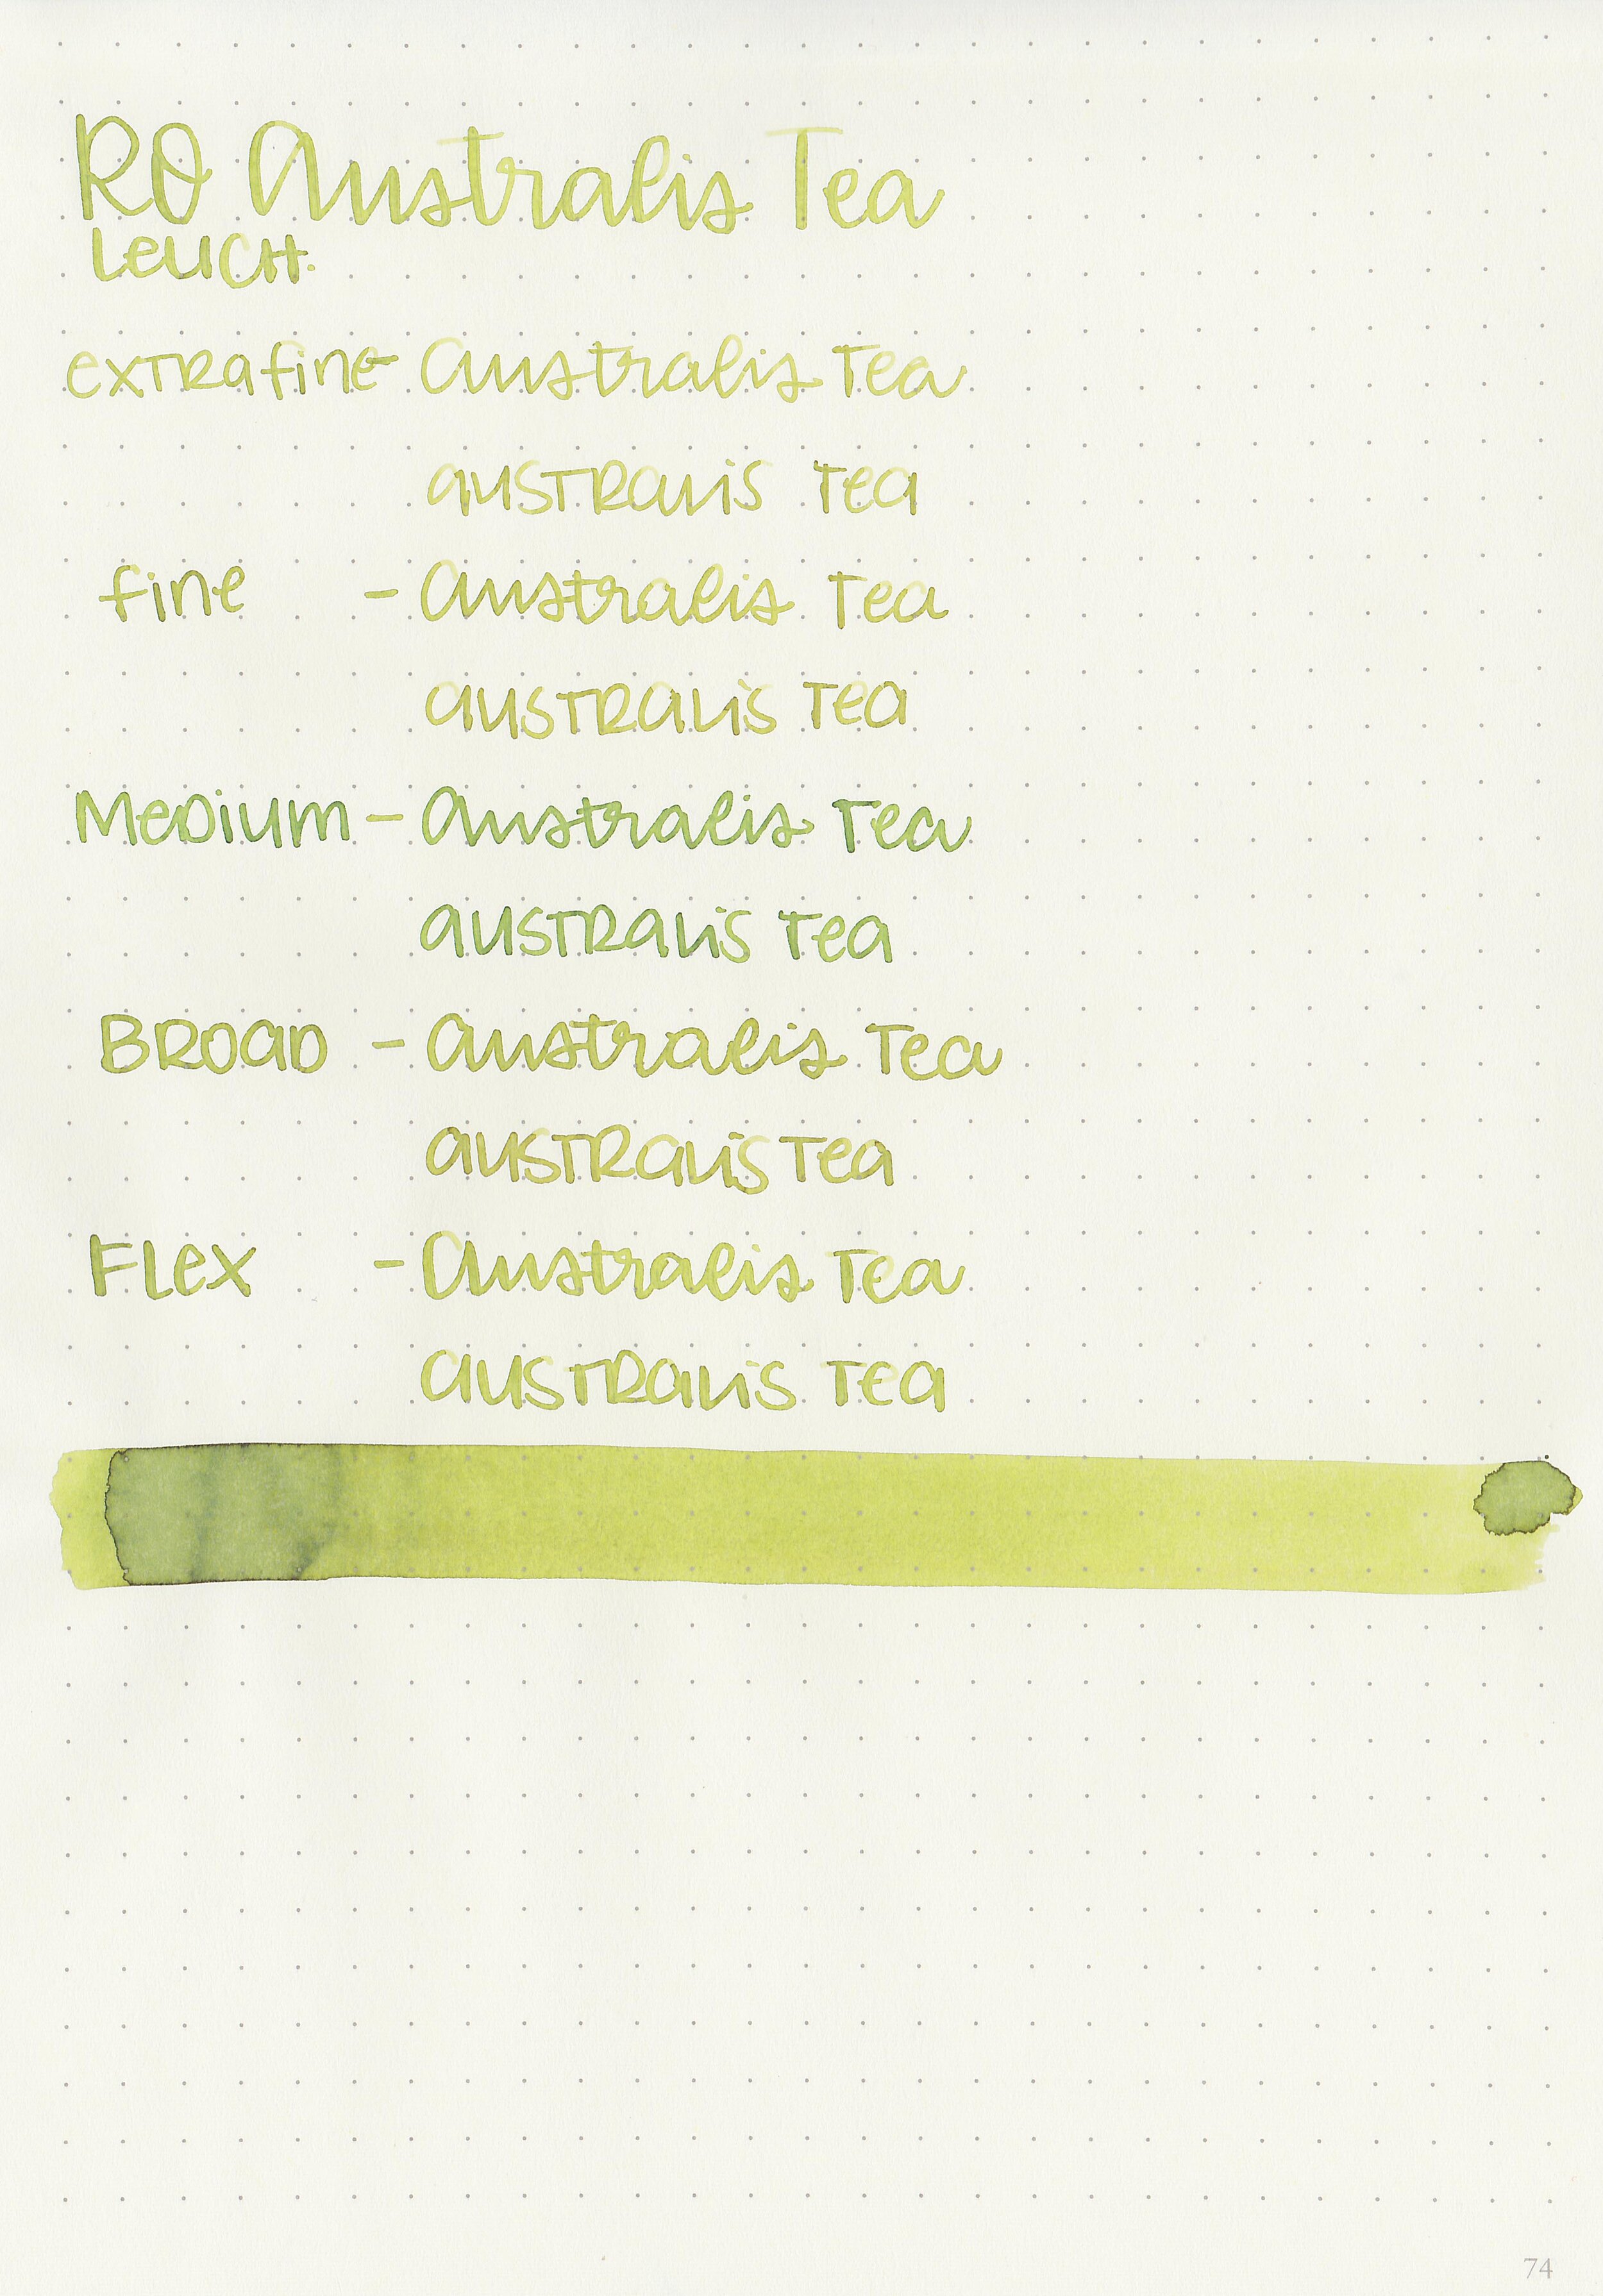 ro-australis-tea-9.jpg